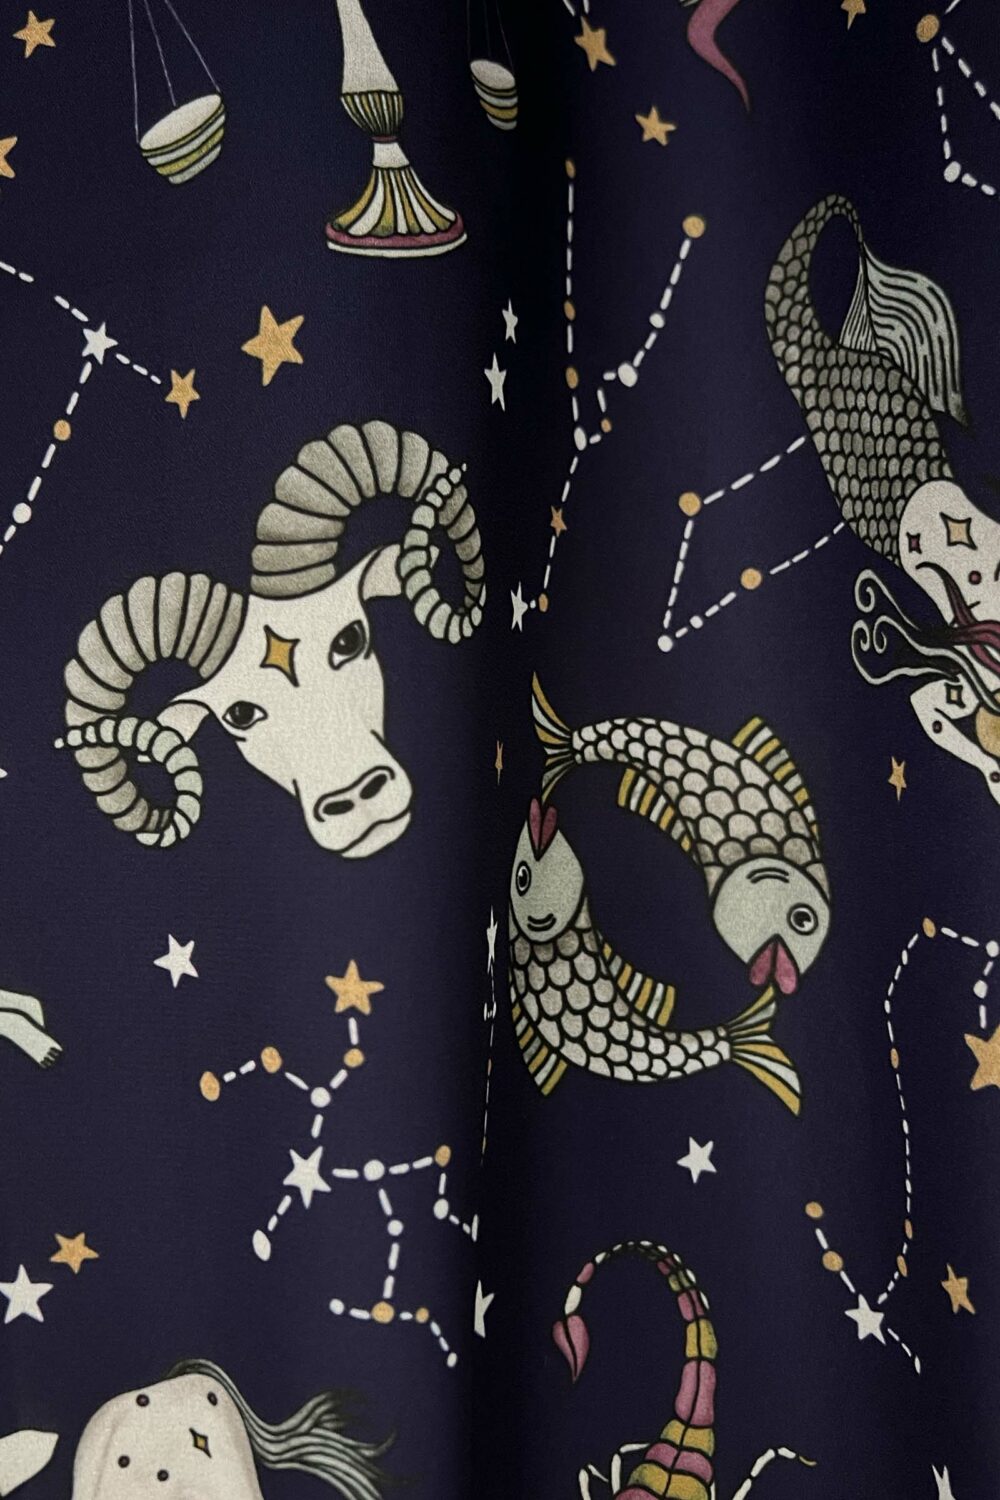 cosmic drifters printed zodiac skies fabric